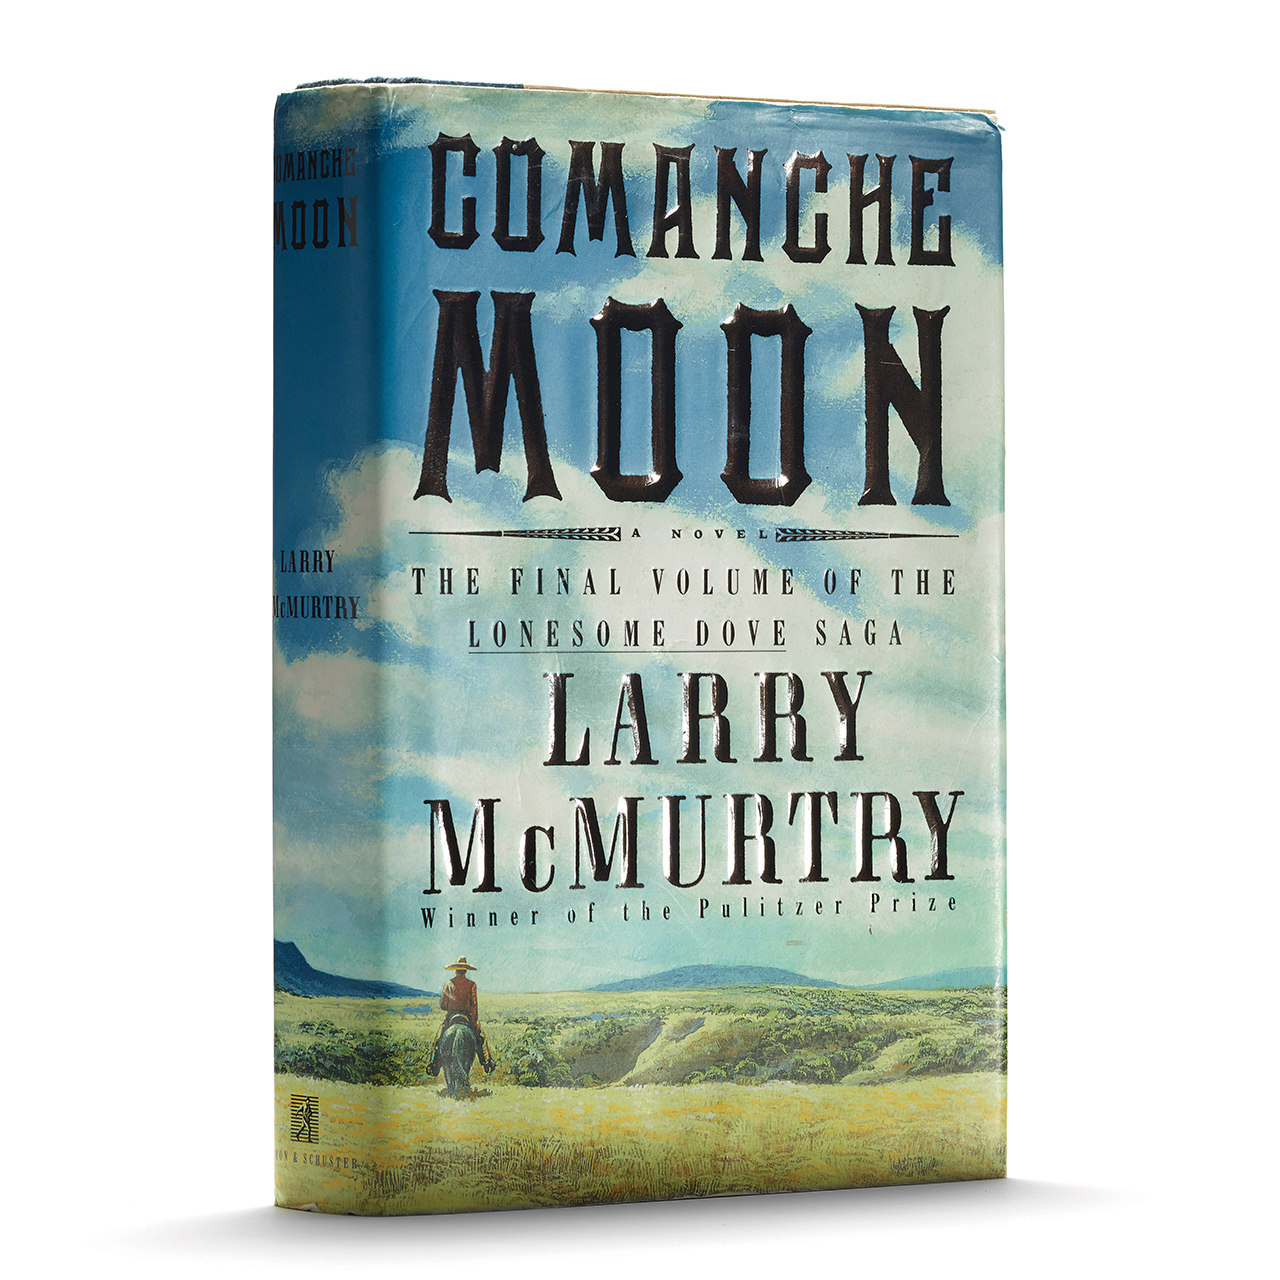 comanche moon larry mcmurtry